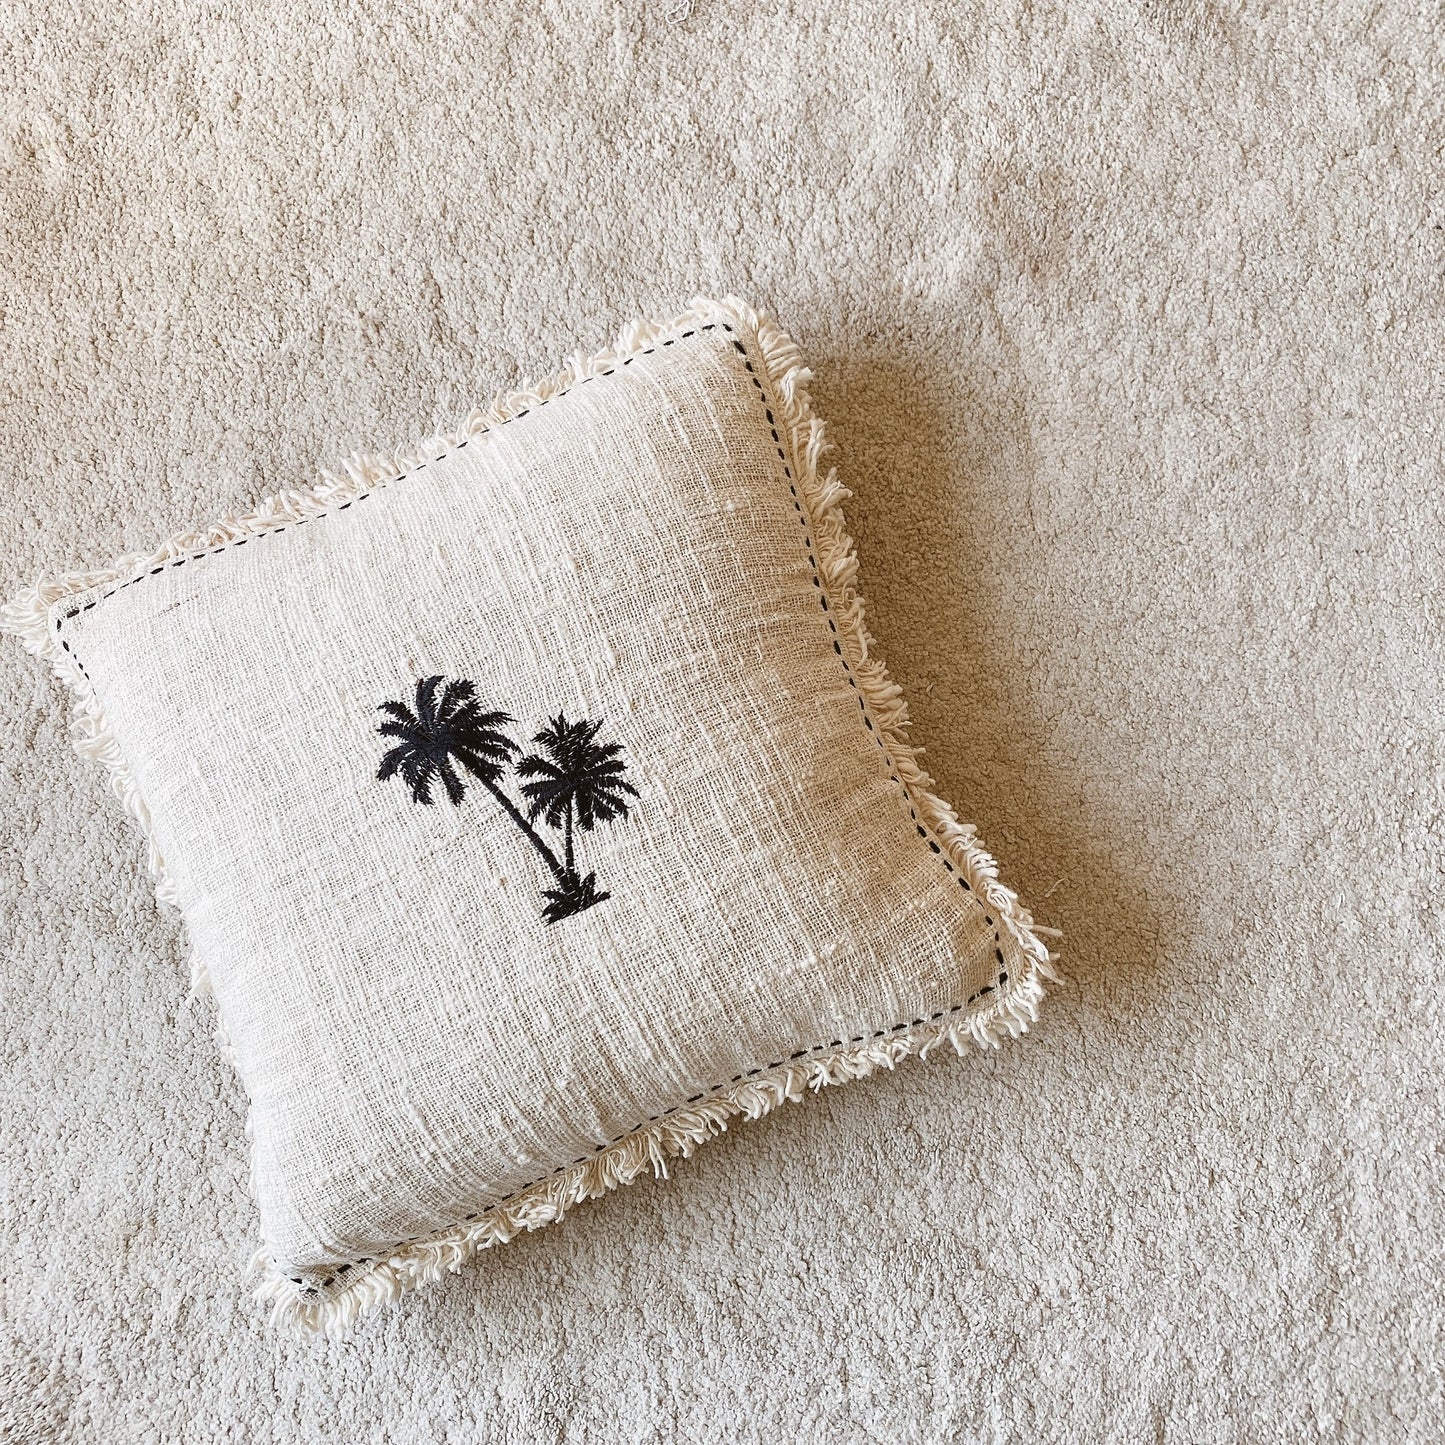 palm tree cushion cover